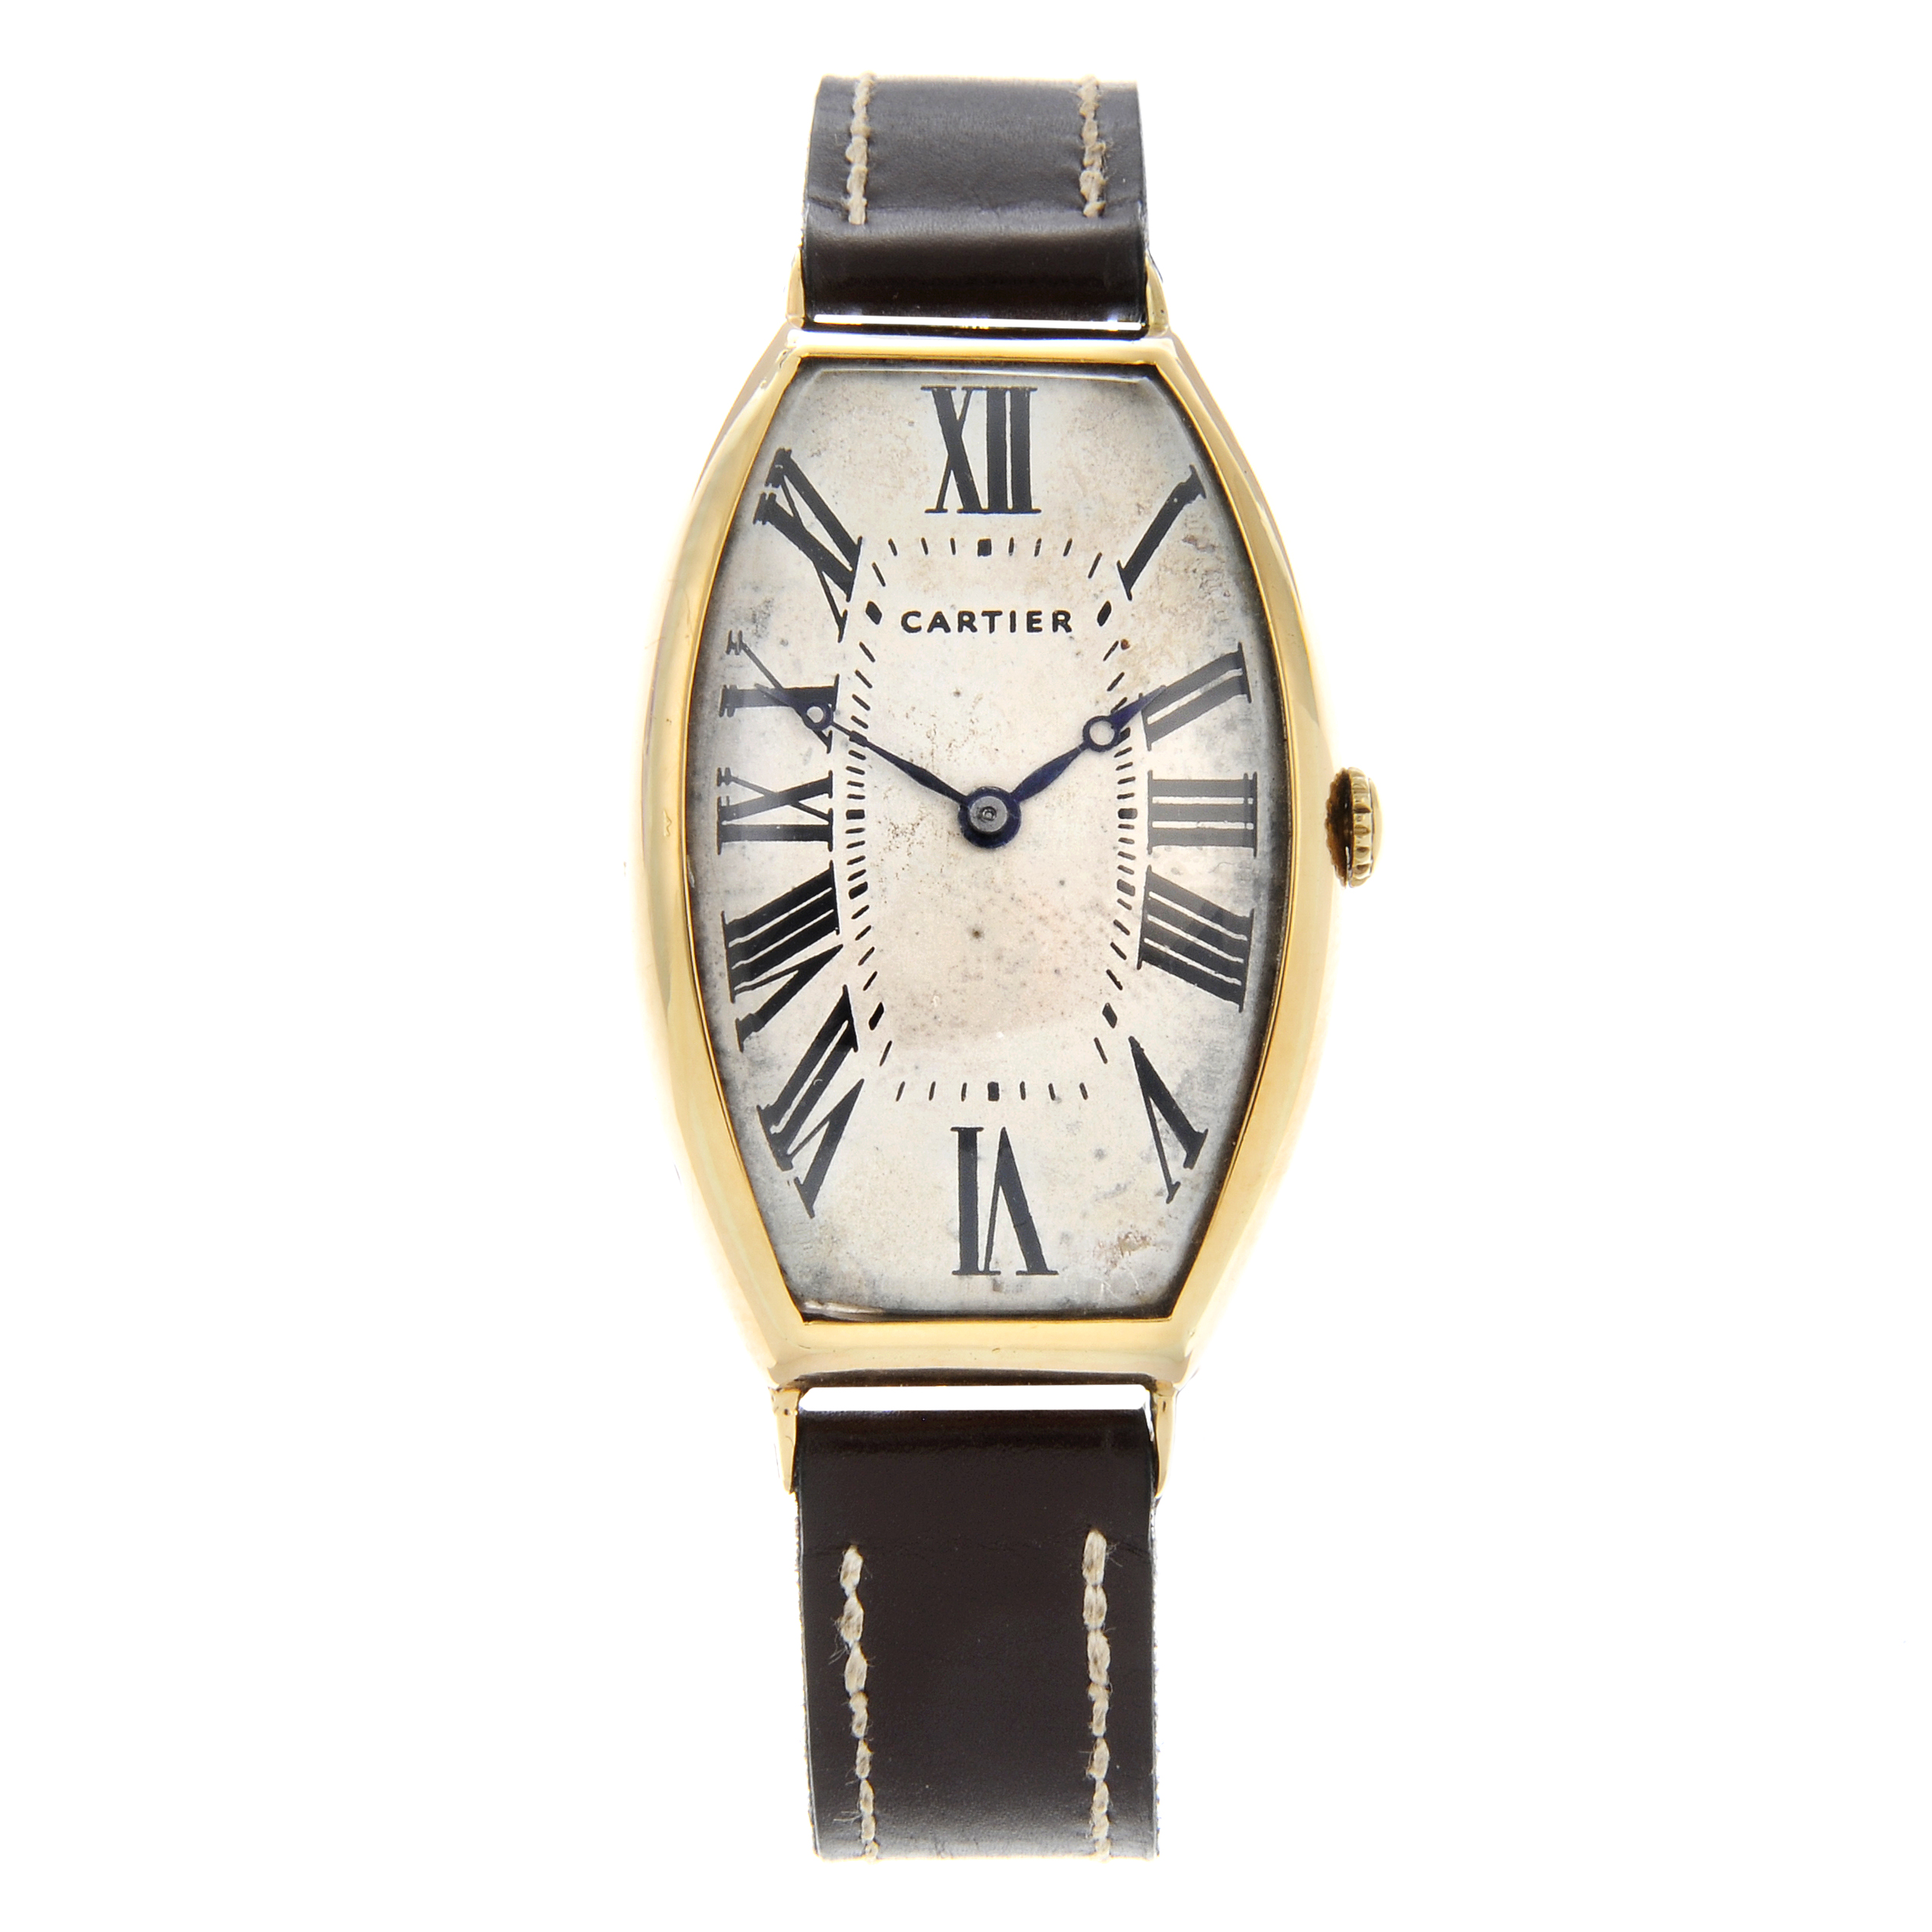 Cartier watch worn by Scottish WW1 